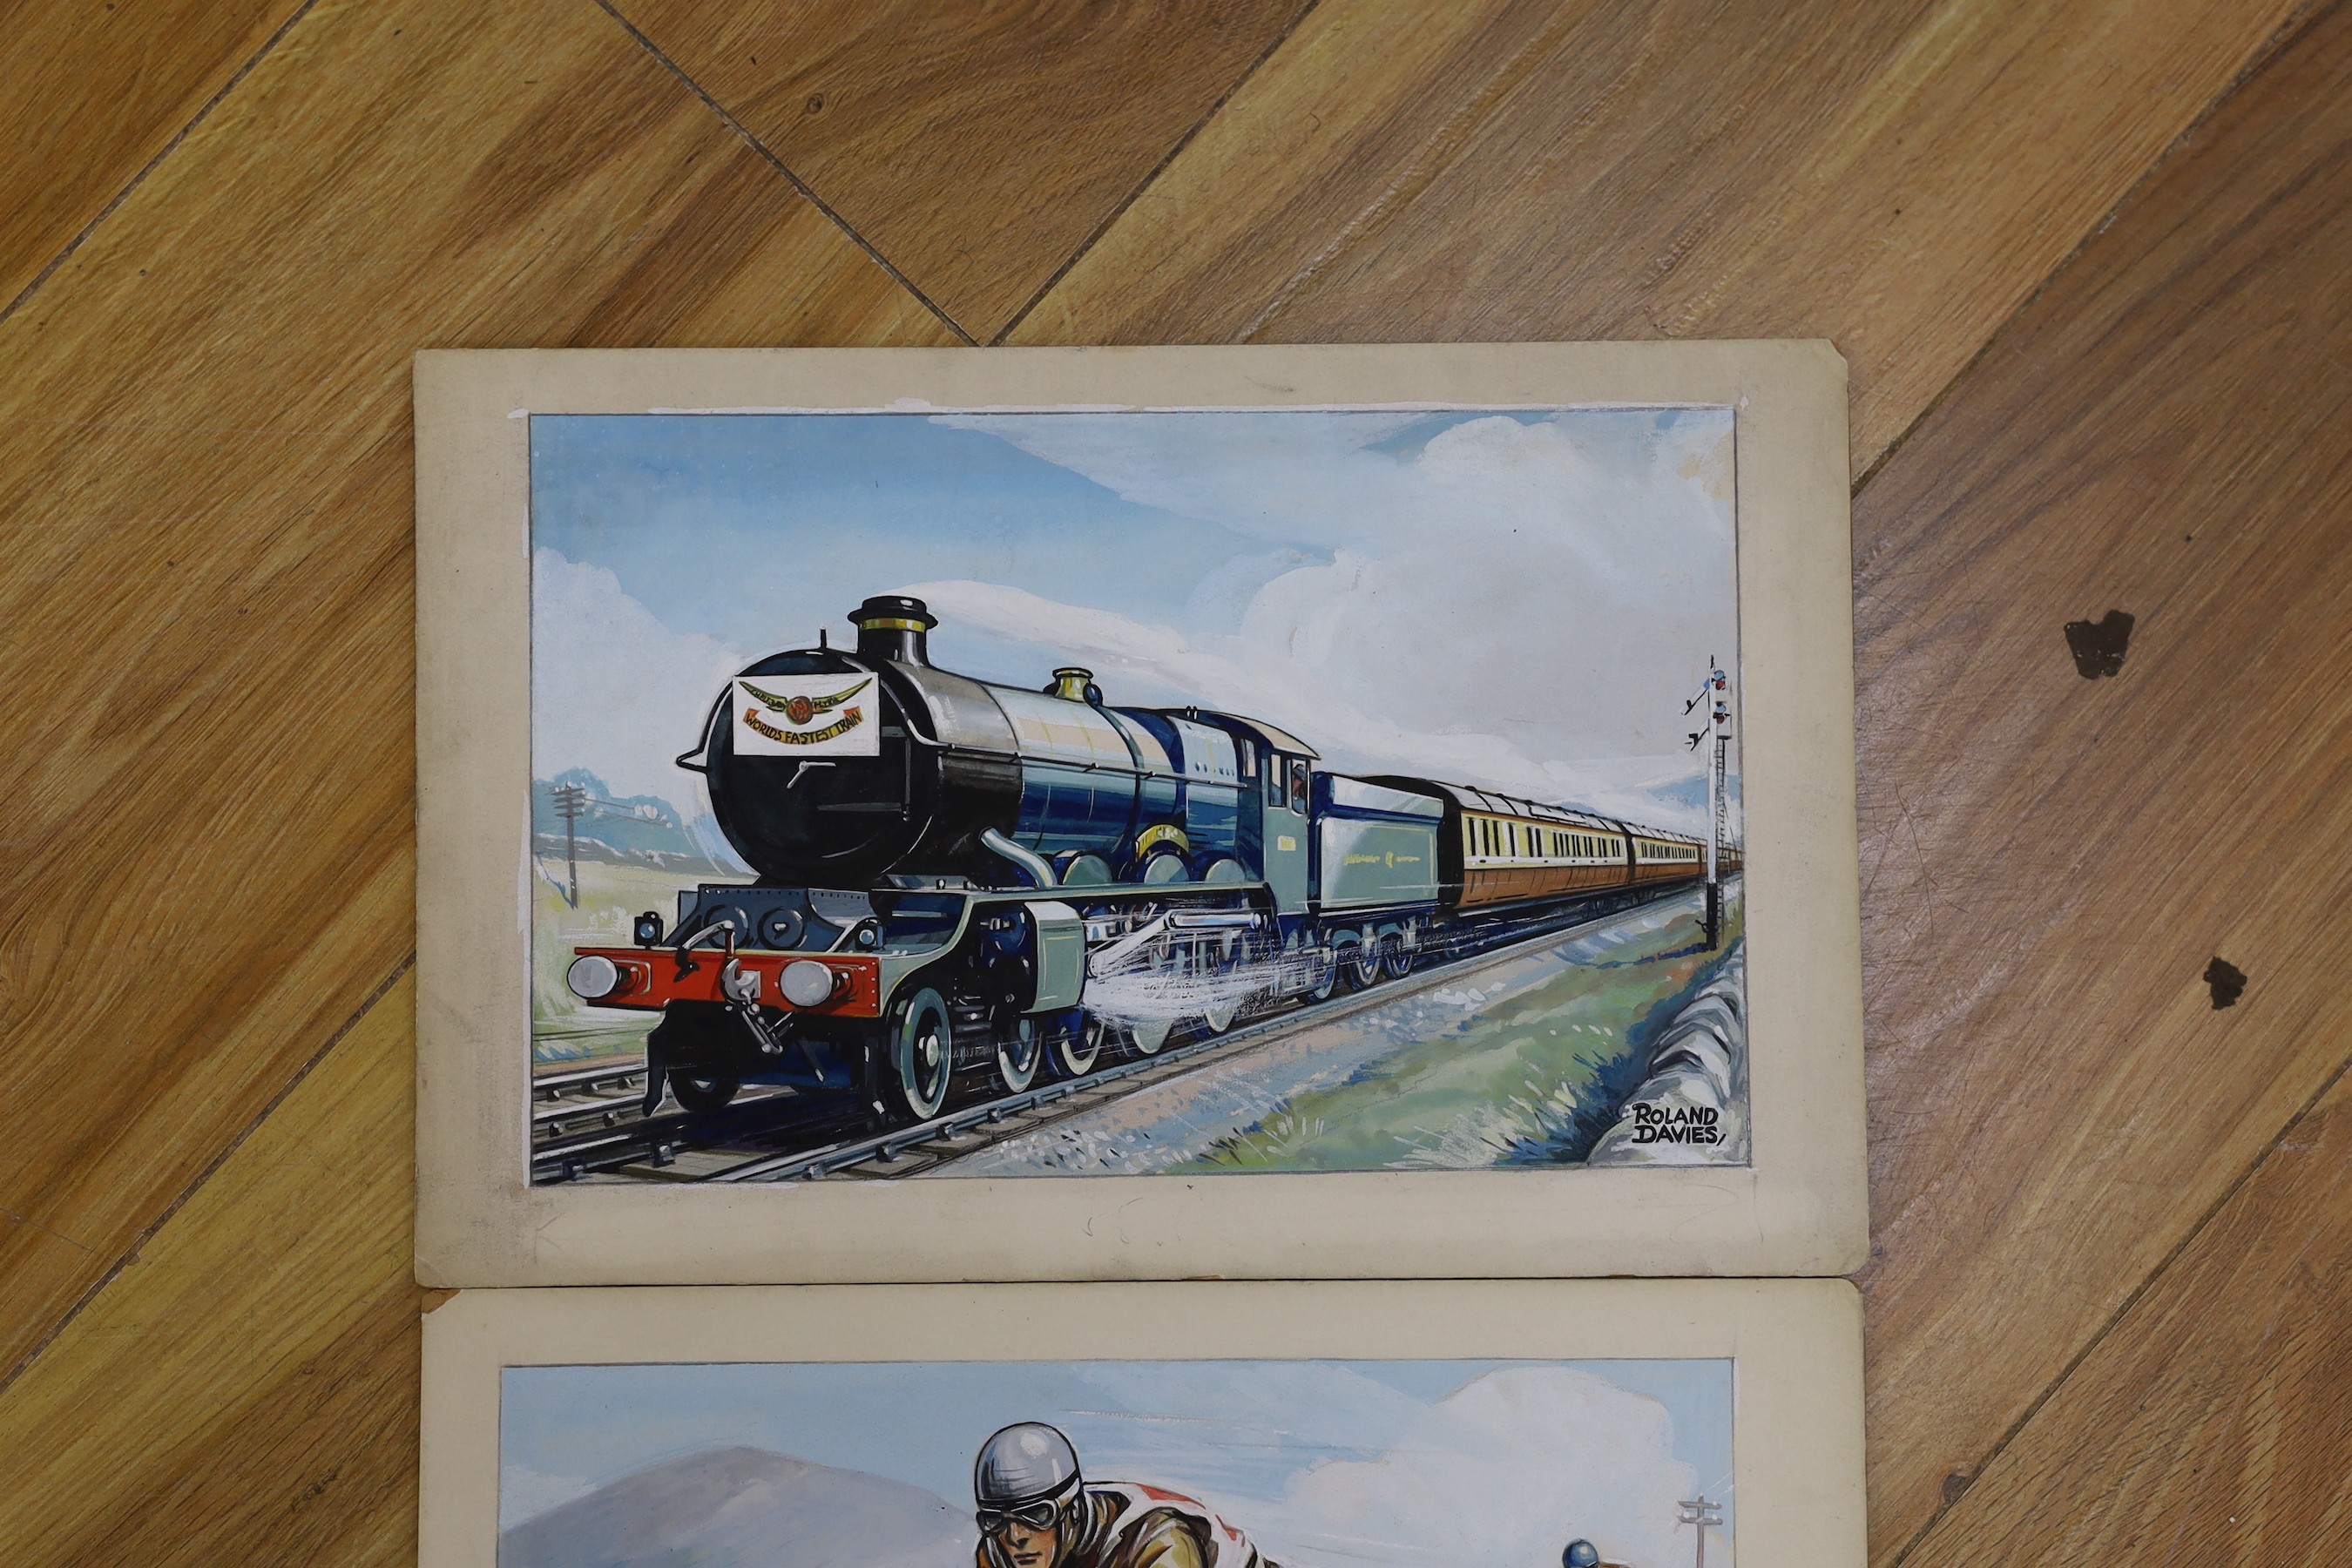 Roland Davies (1904-1993), three gouaches, Vintage transport, 'Legends of Speed', signed, 16 x 26cm, unframed